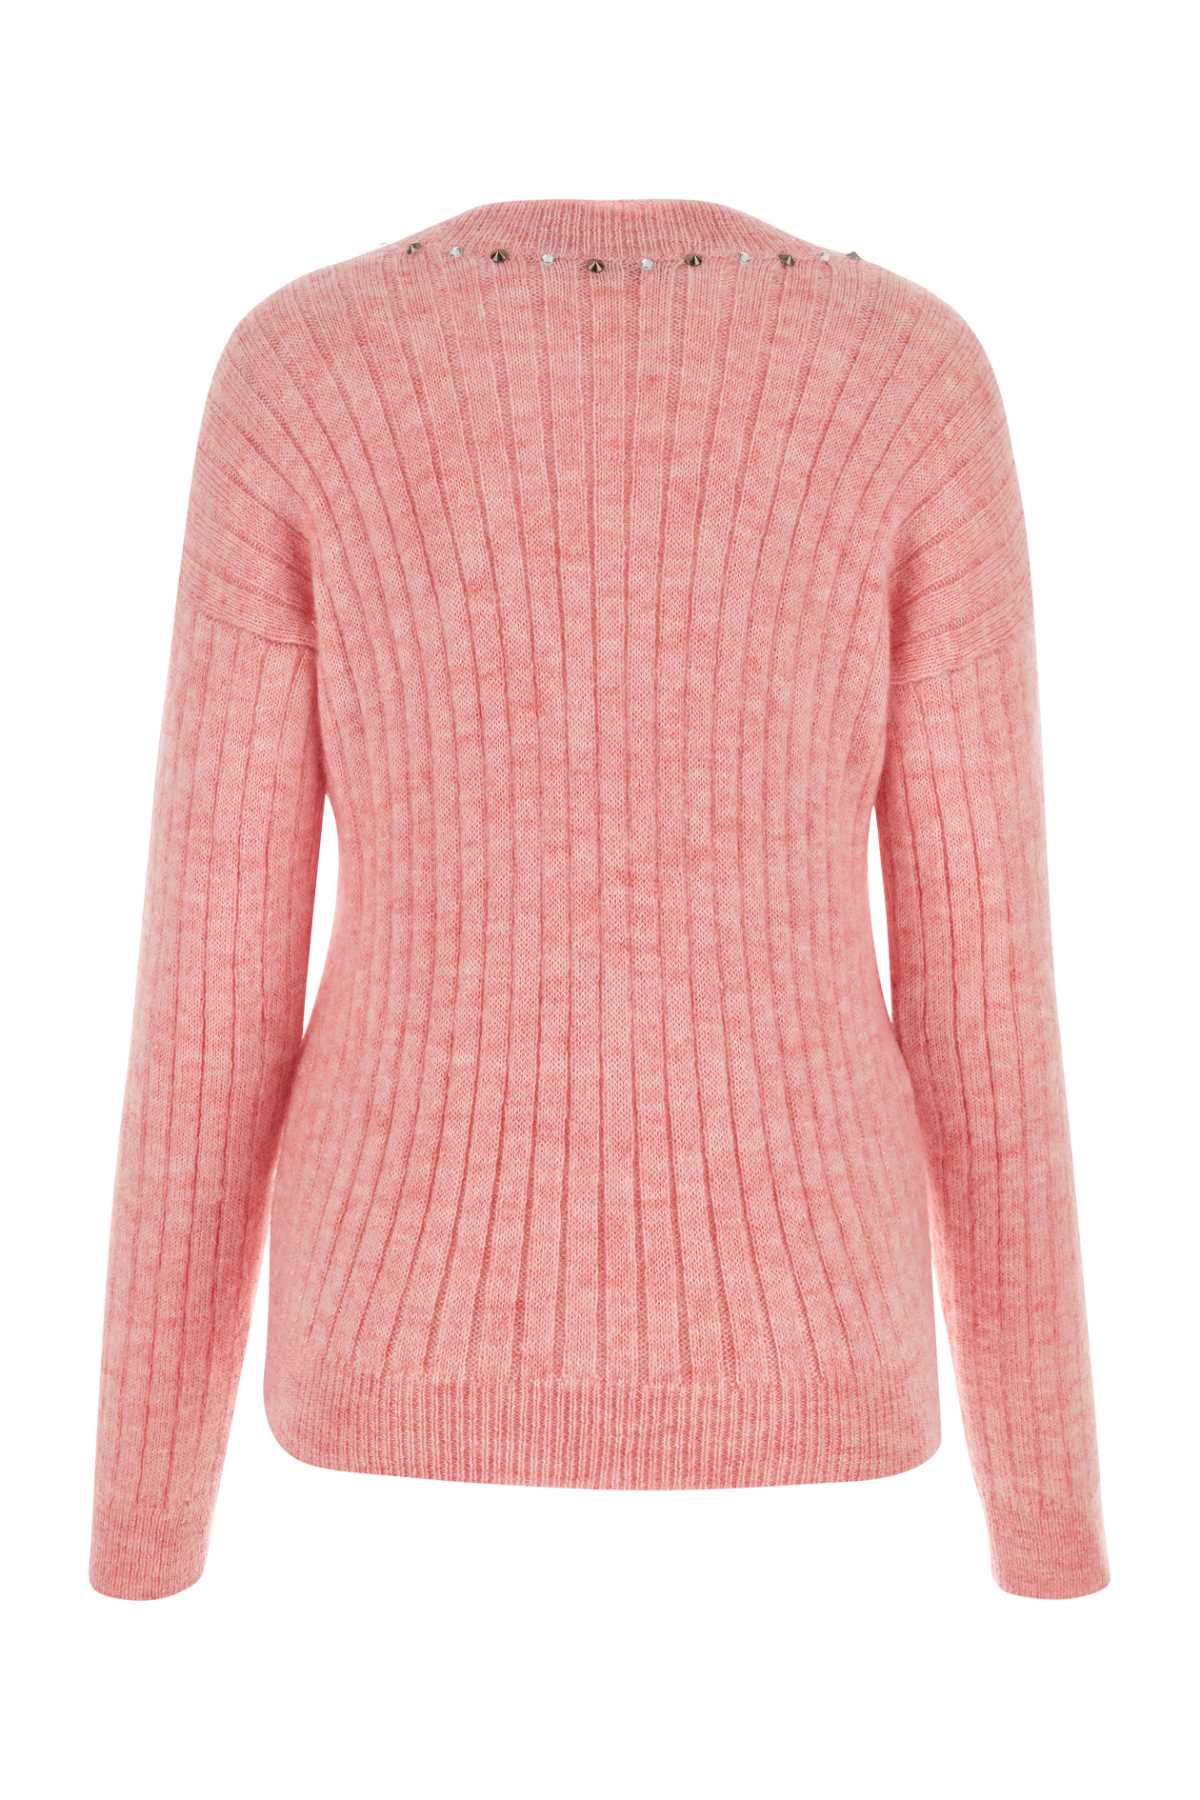 Alessandra Rich Melange Pink Wool Blend Sweater In Pinkme